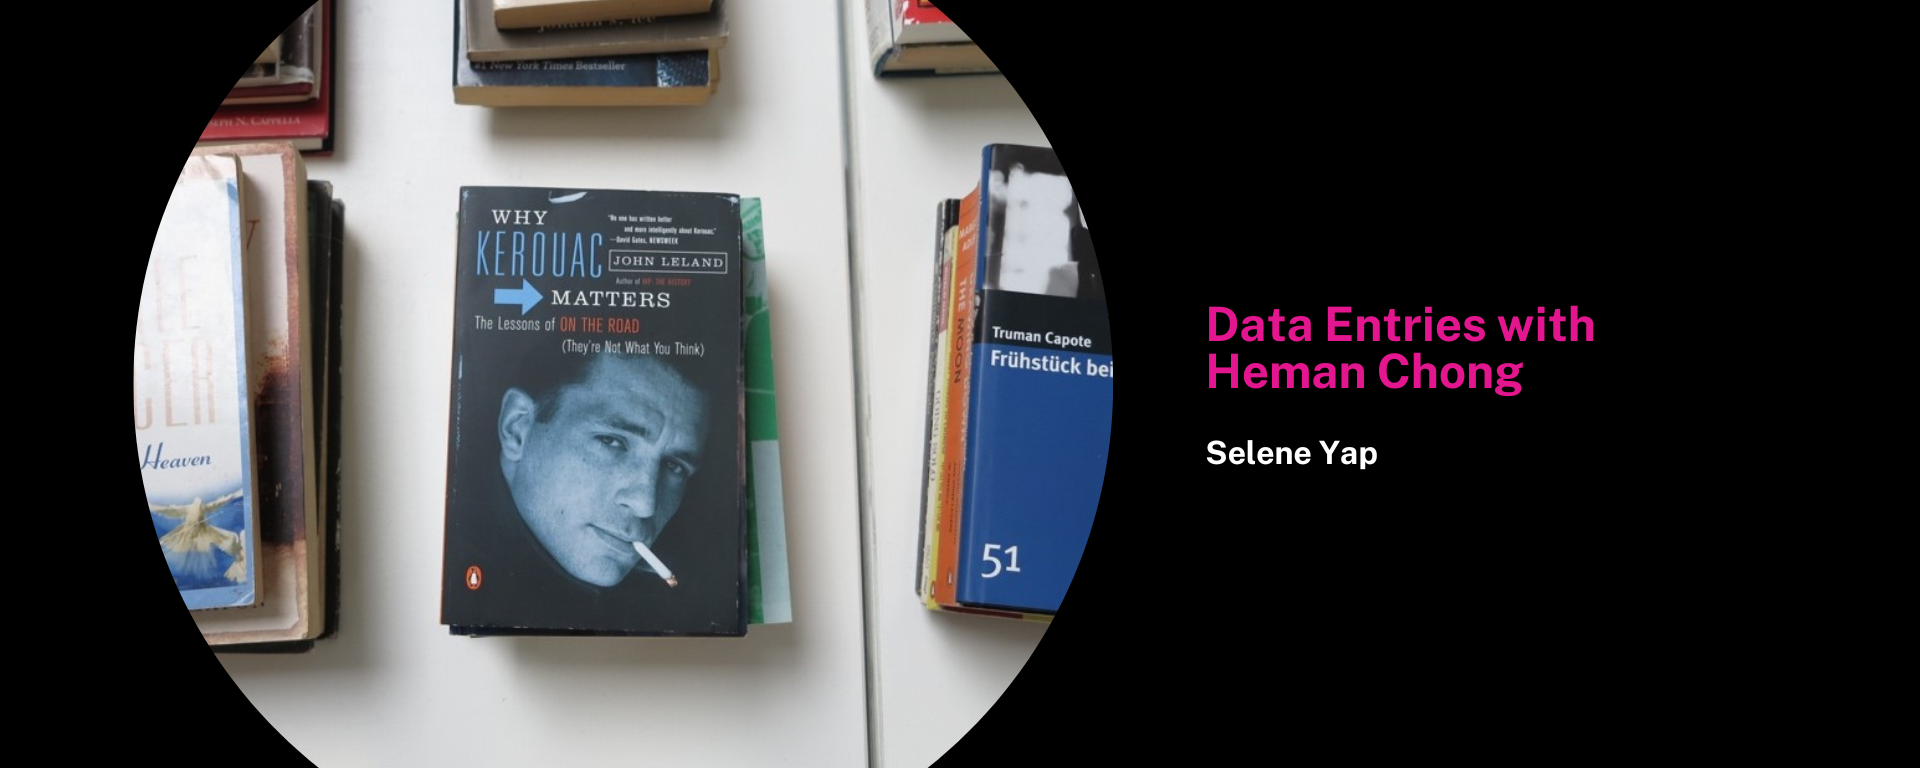 Data Entries with Heman Chong